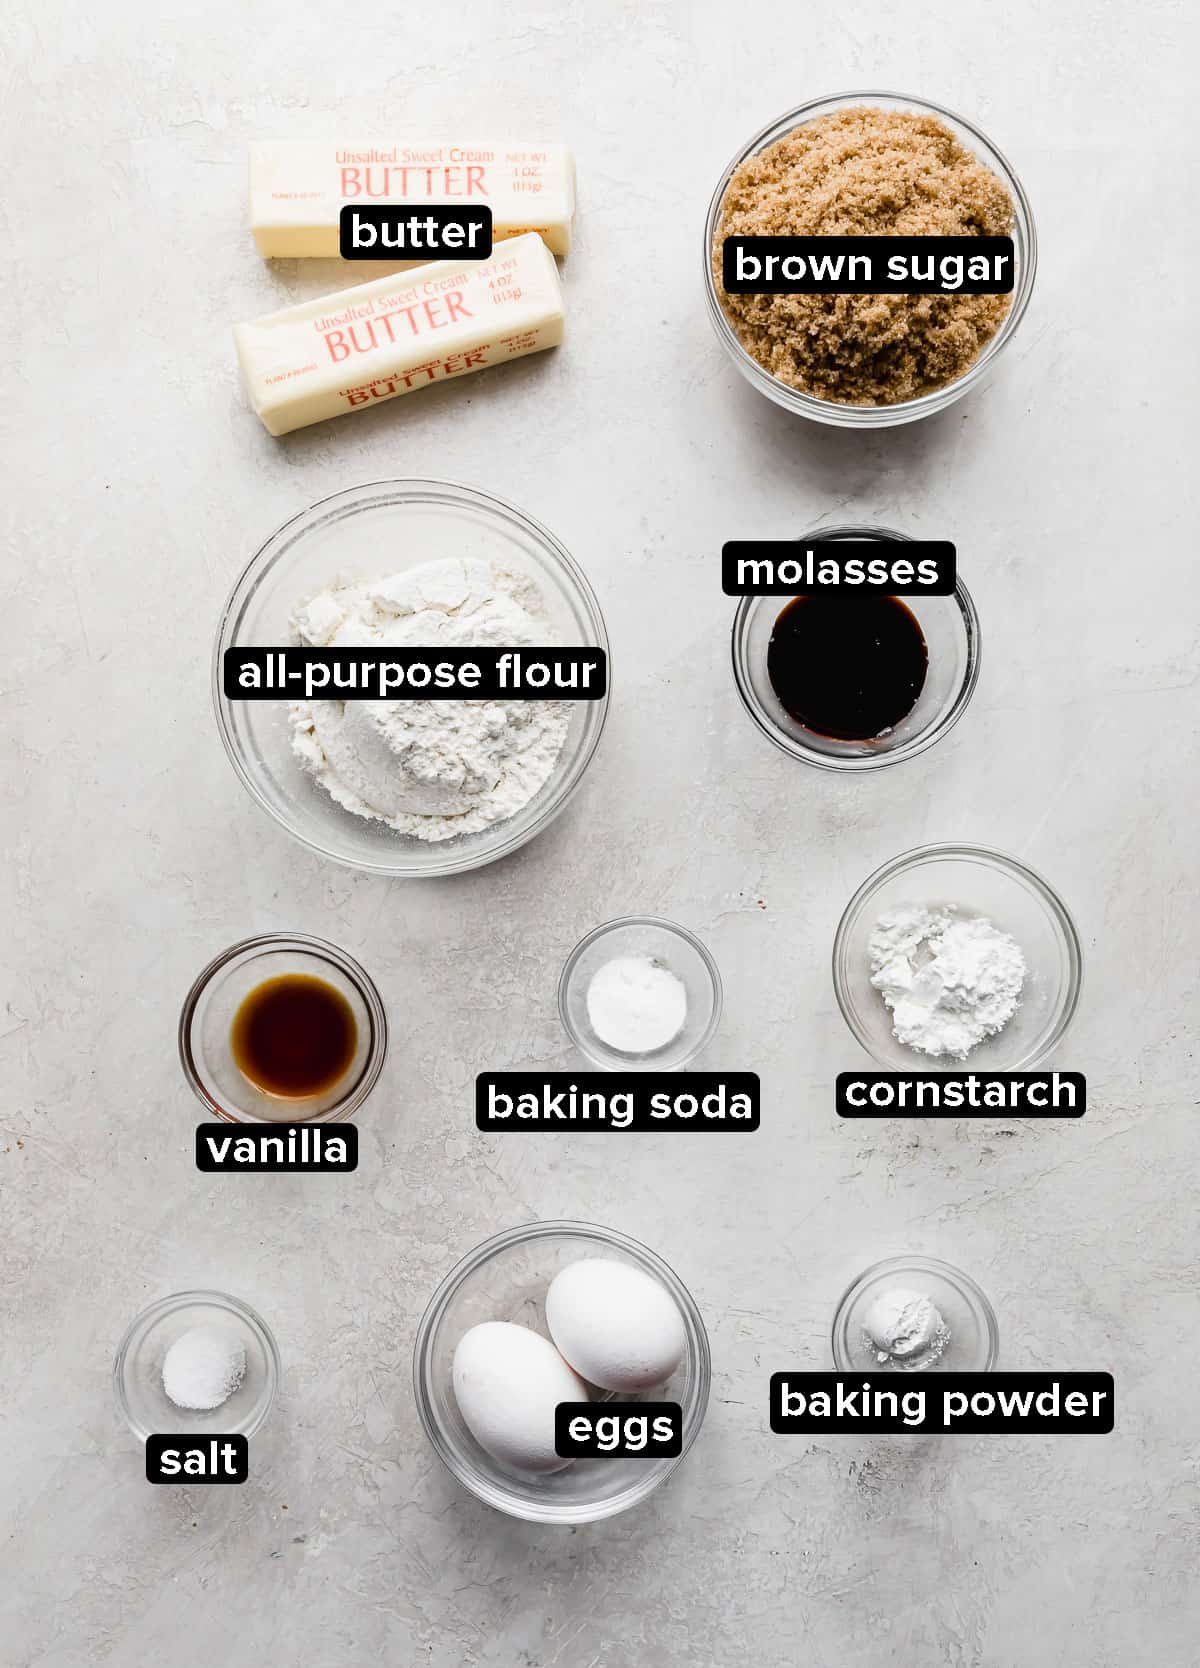 Ingredients in glass bowls such as: flour, butter, sugar, vanilla, salt, baking powder, baking soda, on a gray background.